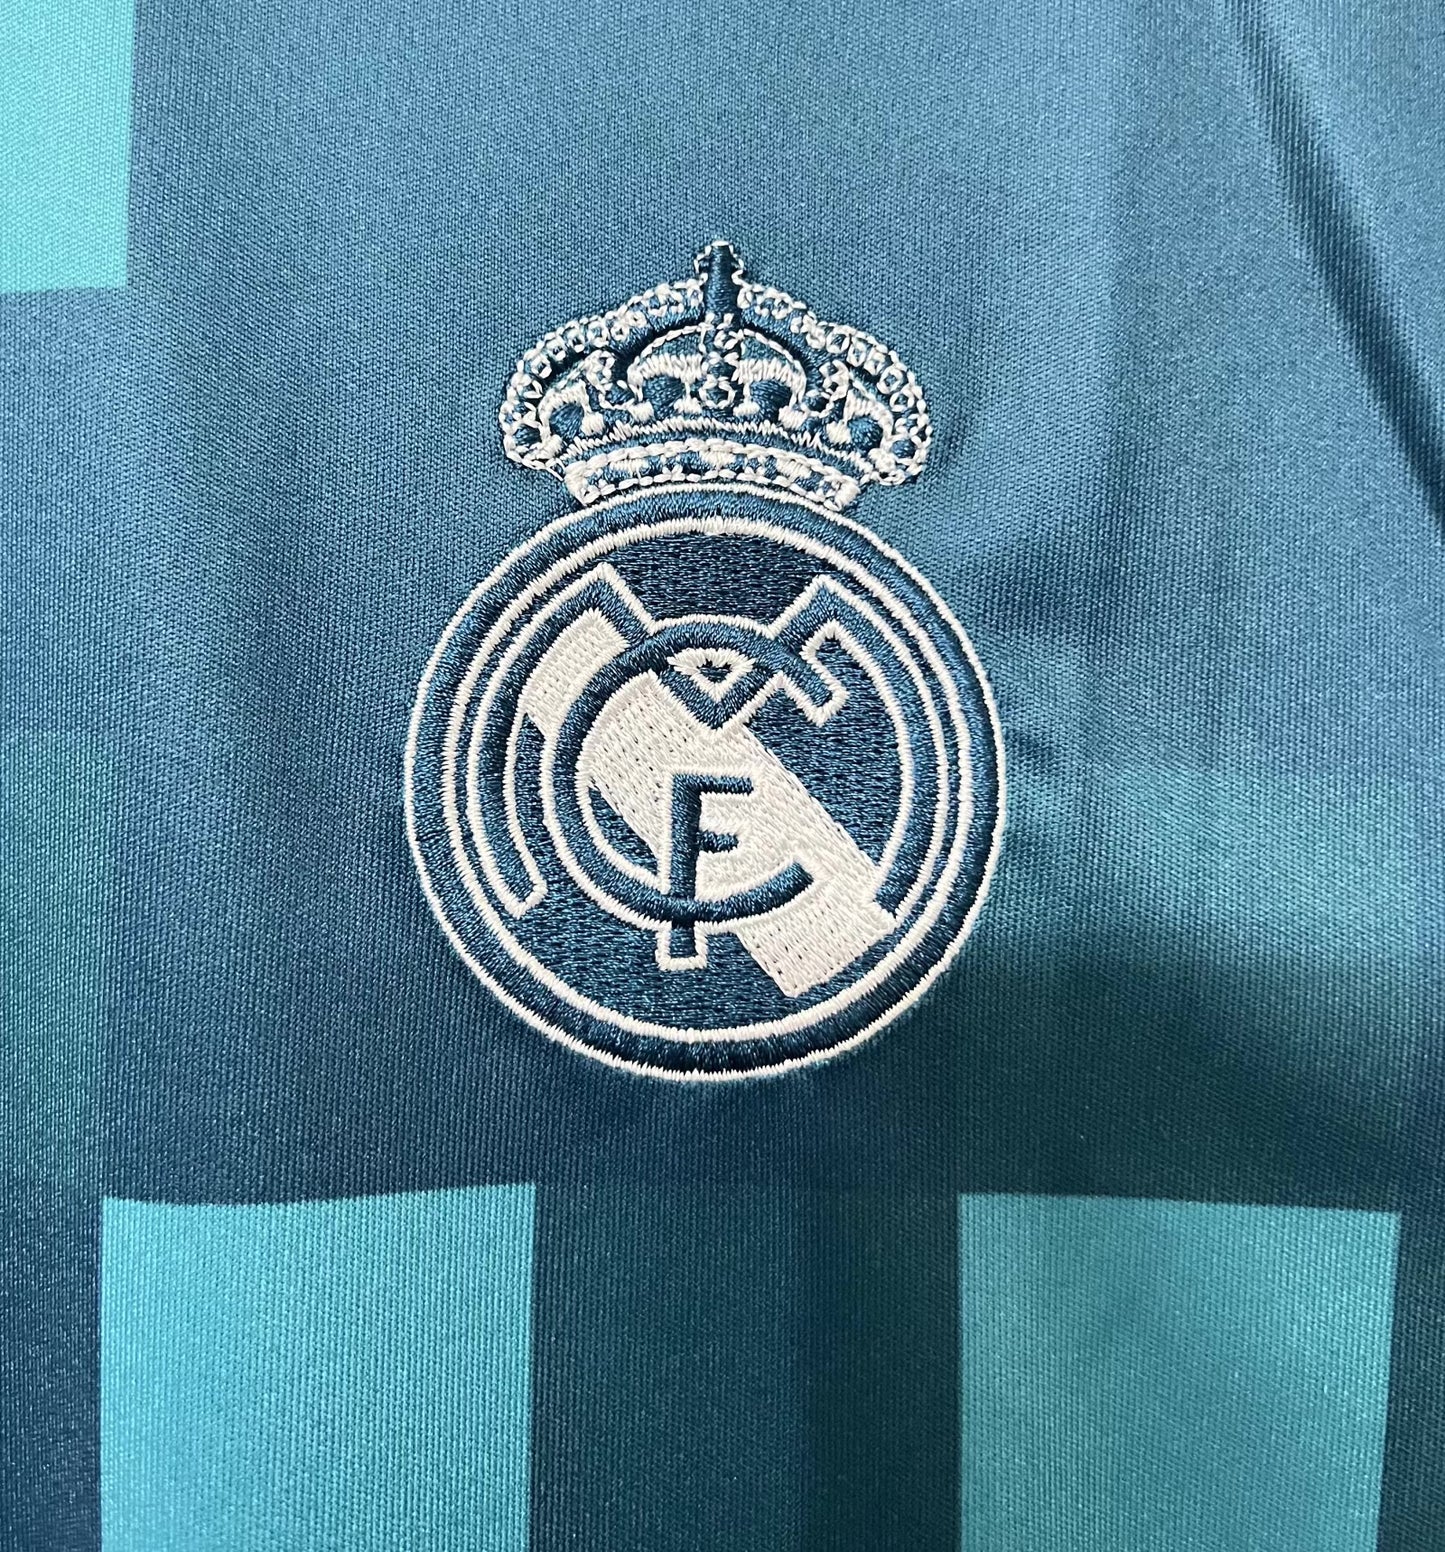 17/18 Real Madrid Third Kit